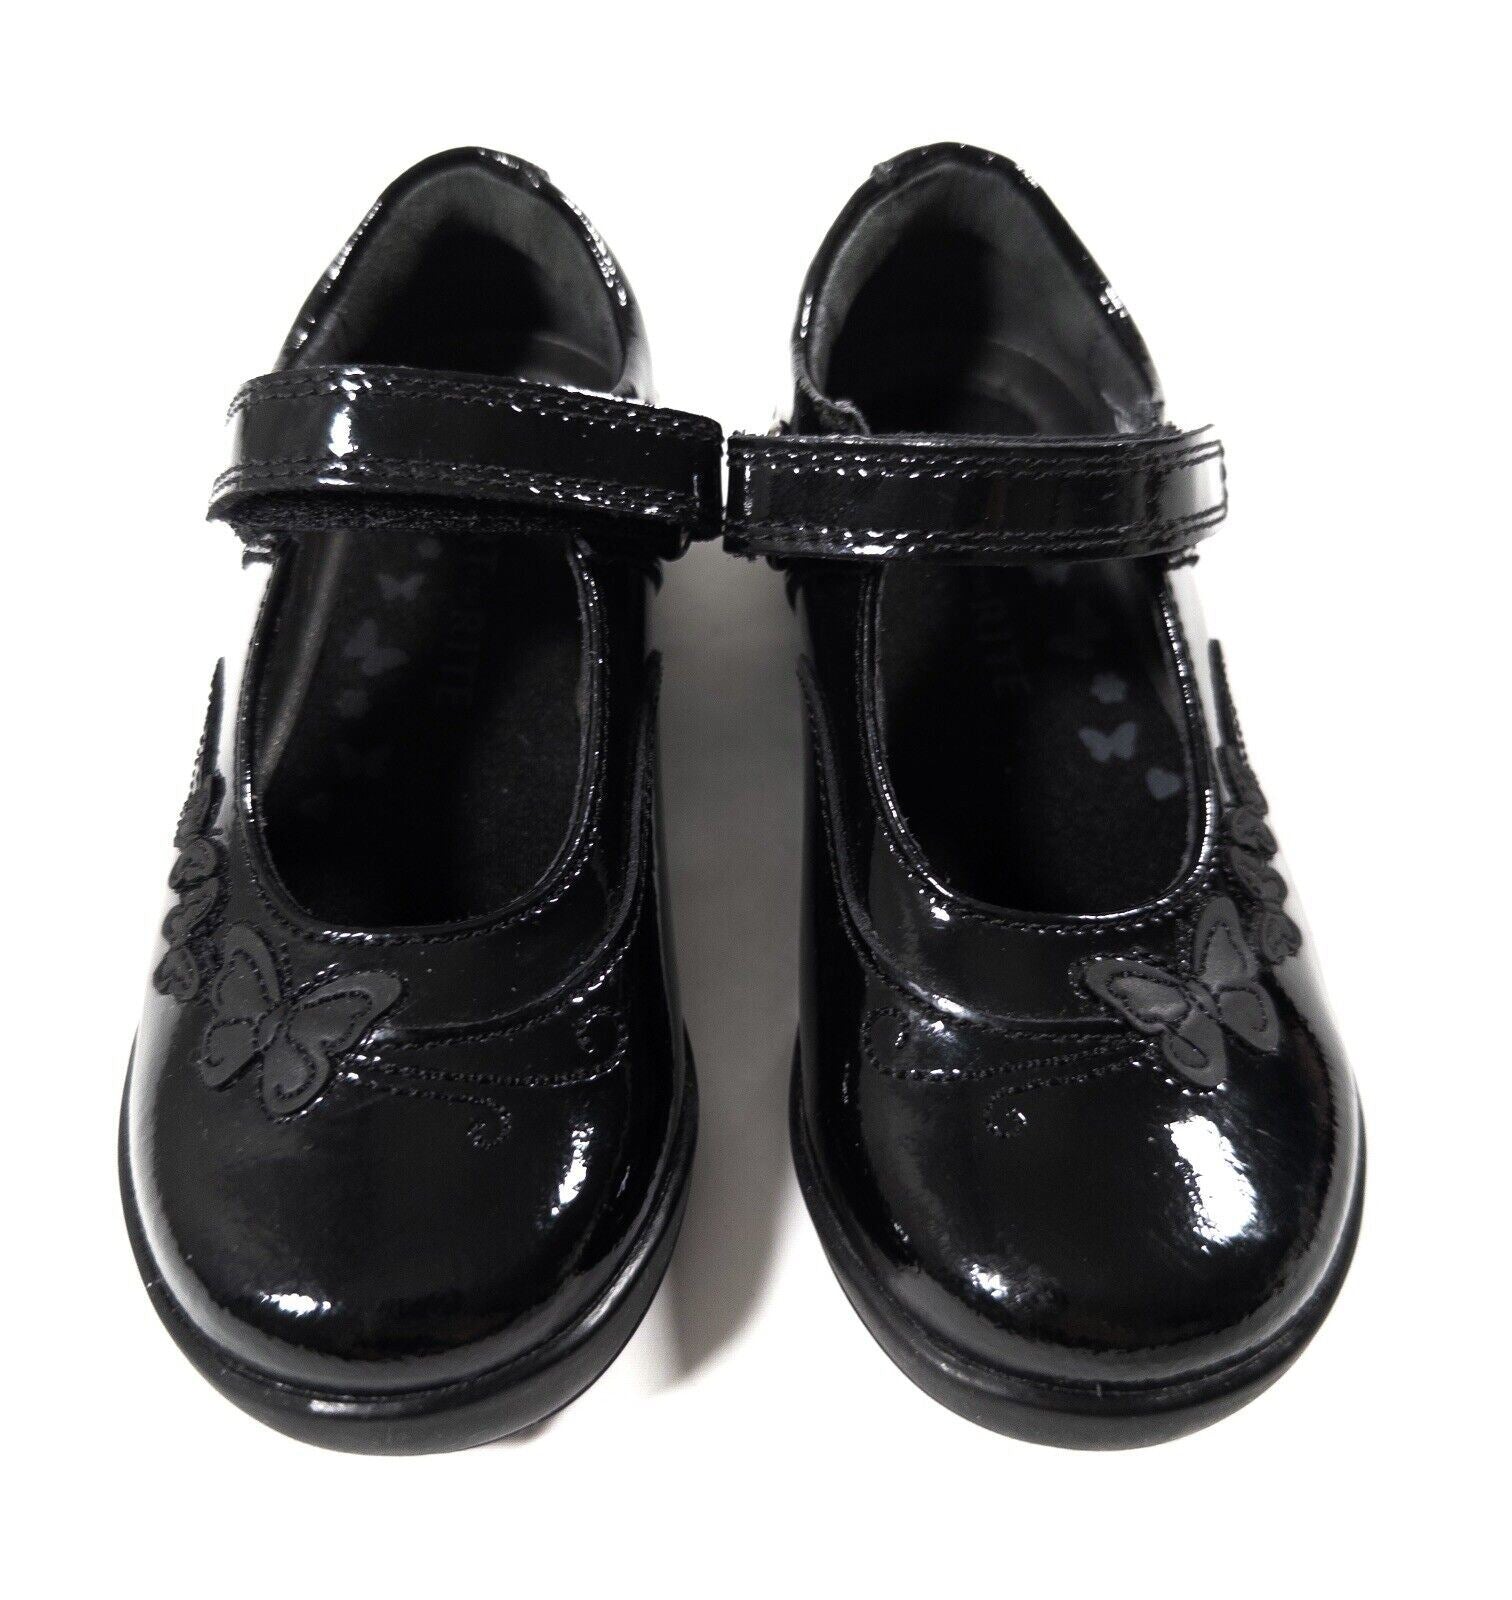 START RITE Kids Girls Black Patent School Shoes Butterflies Design Size UK 7 F